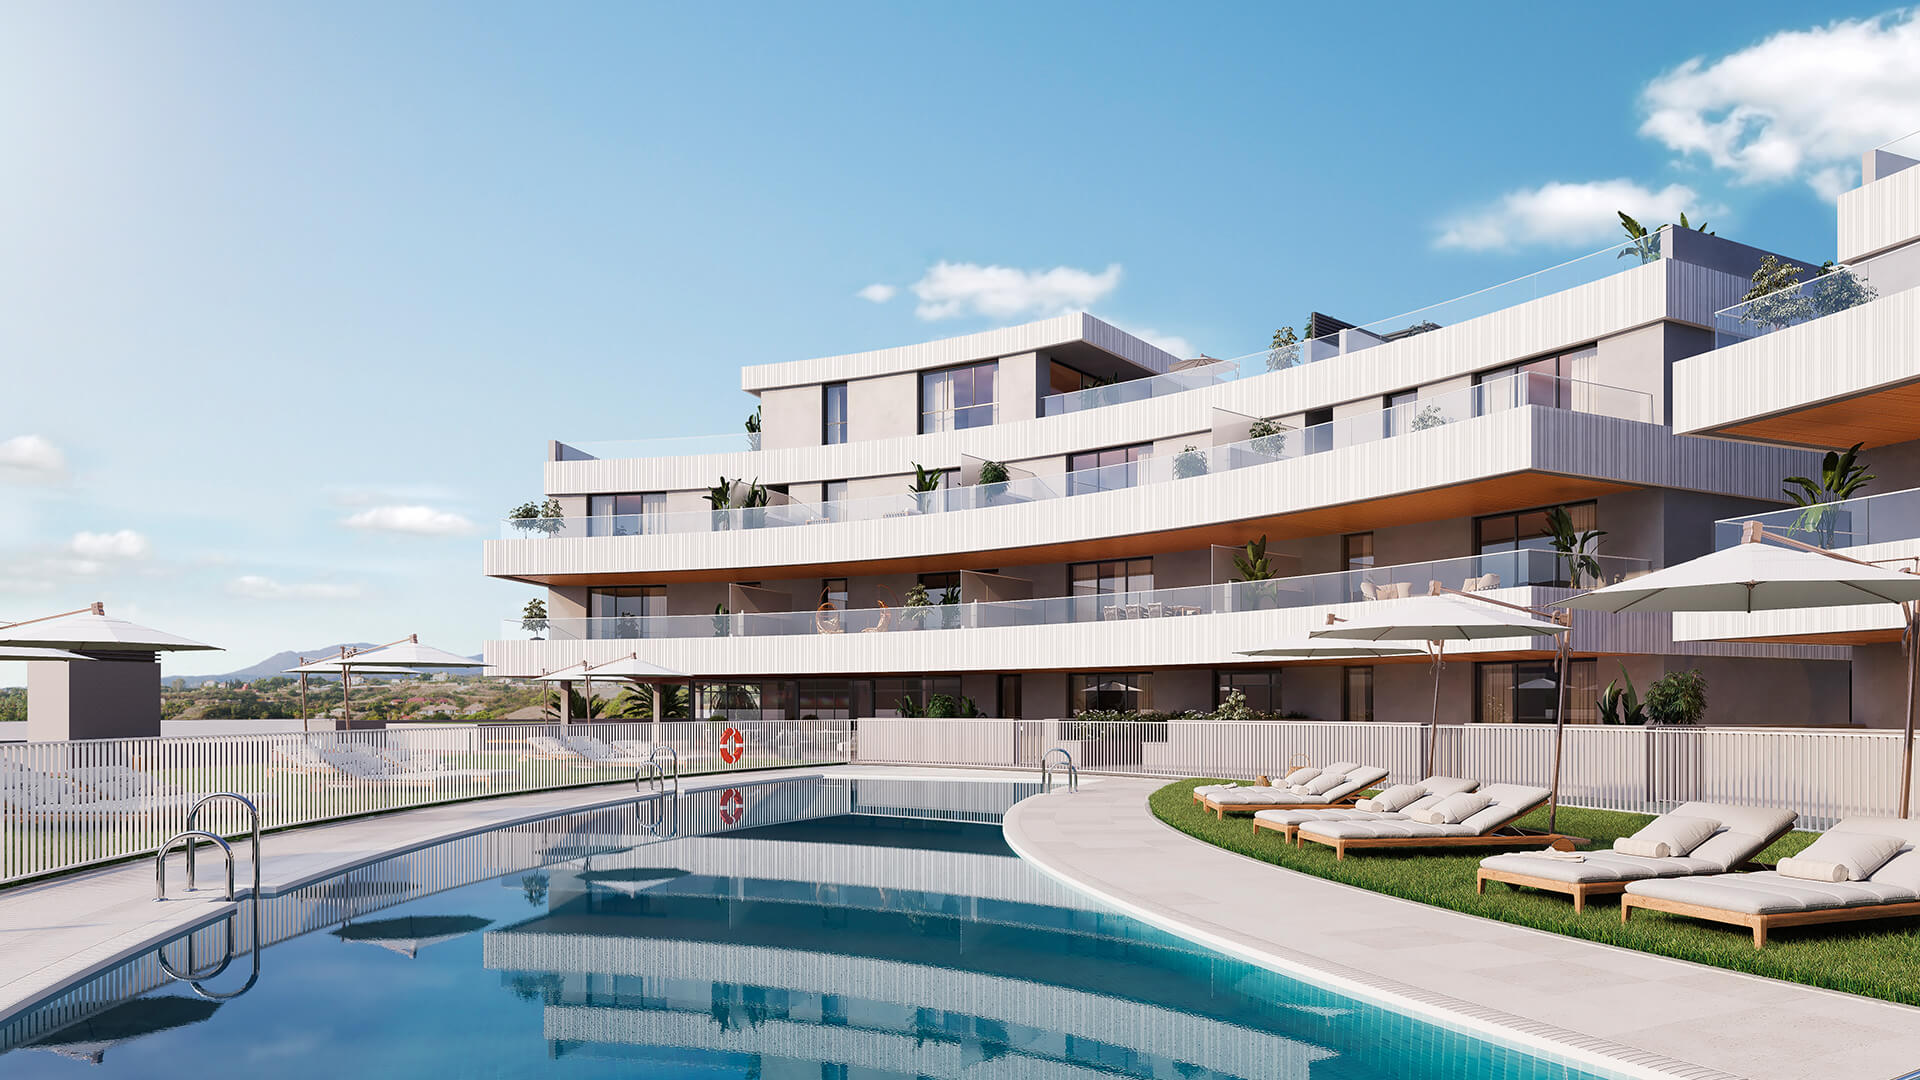 Vanian Views - New Property in Estepona